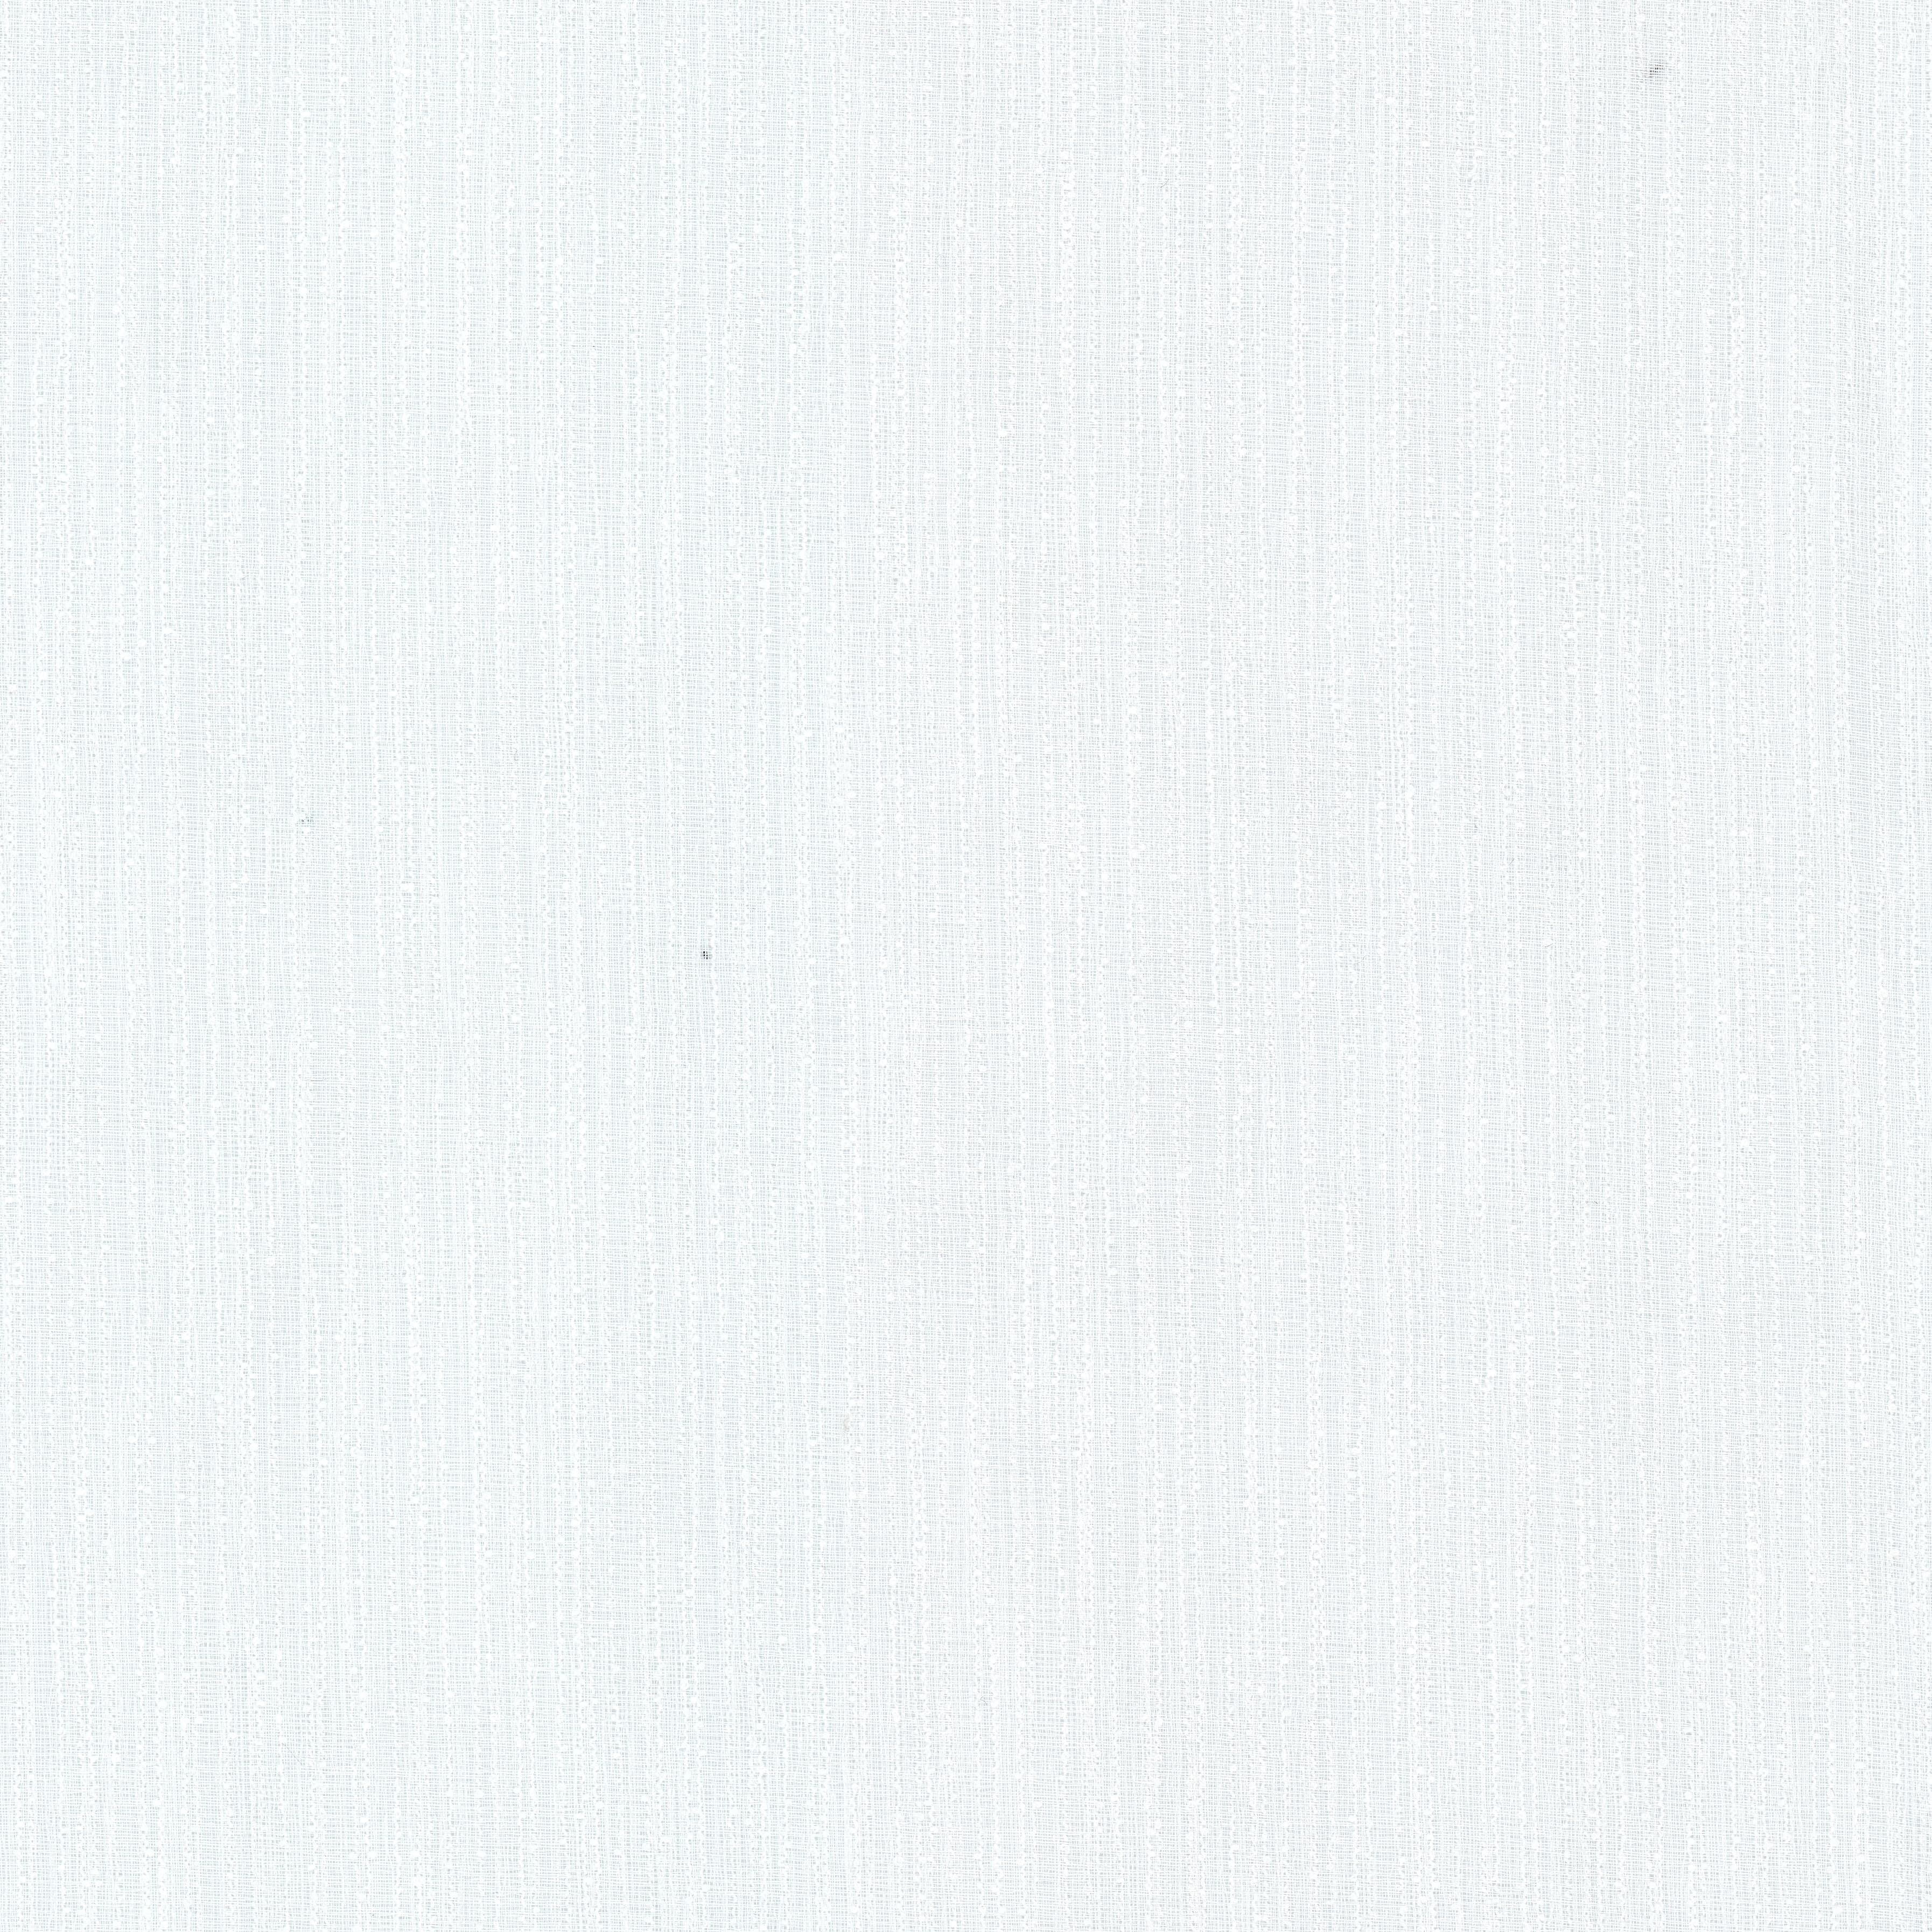 Zweiback 1 White by Stout Fabric